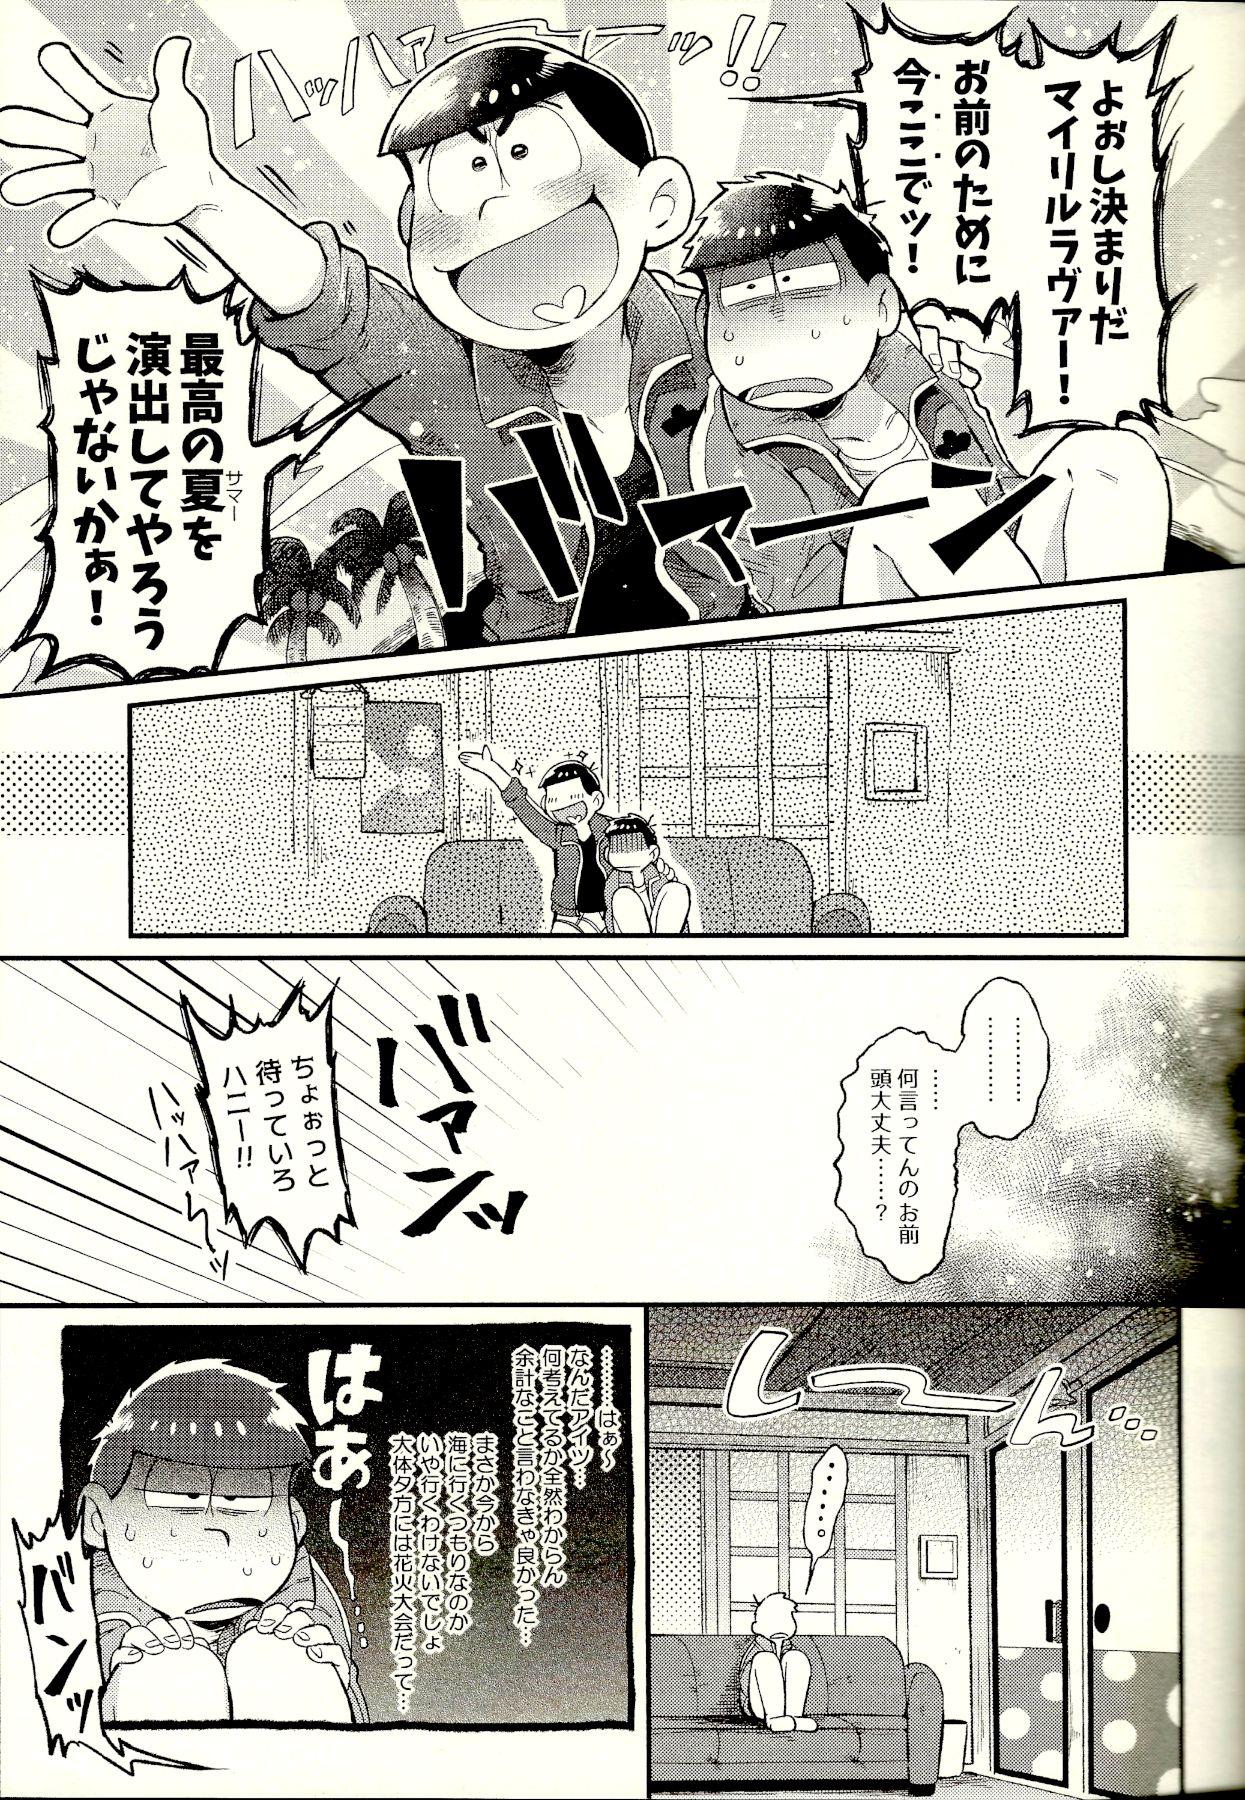 Japanese Season in the Summer - Osomatsu-san Real Couple - Page 9